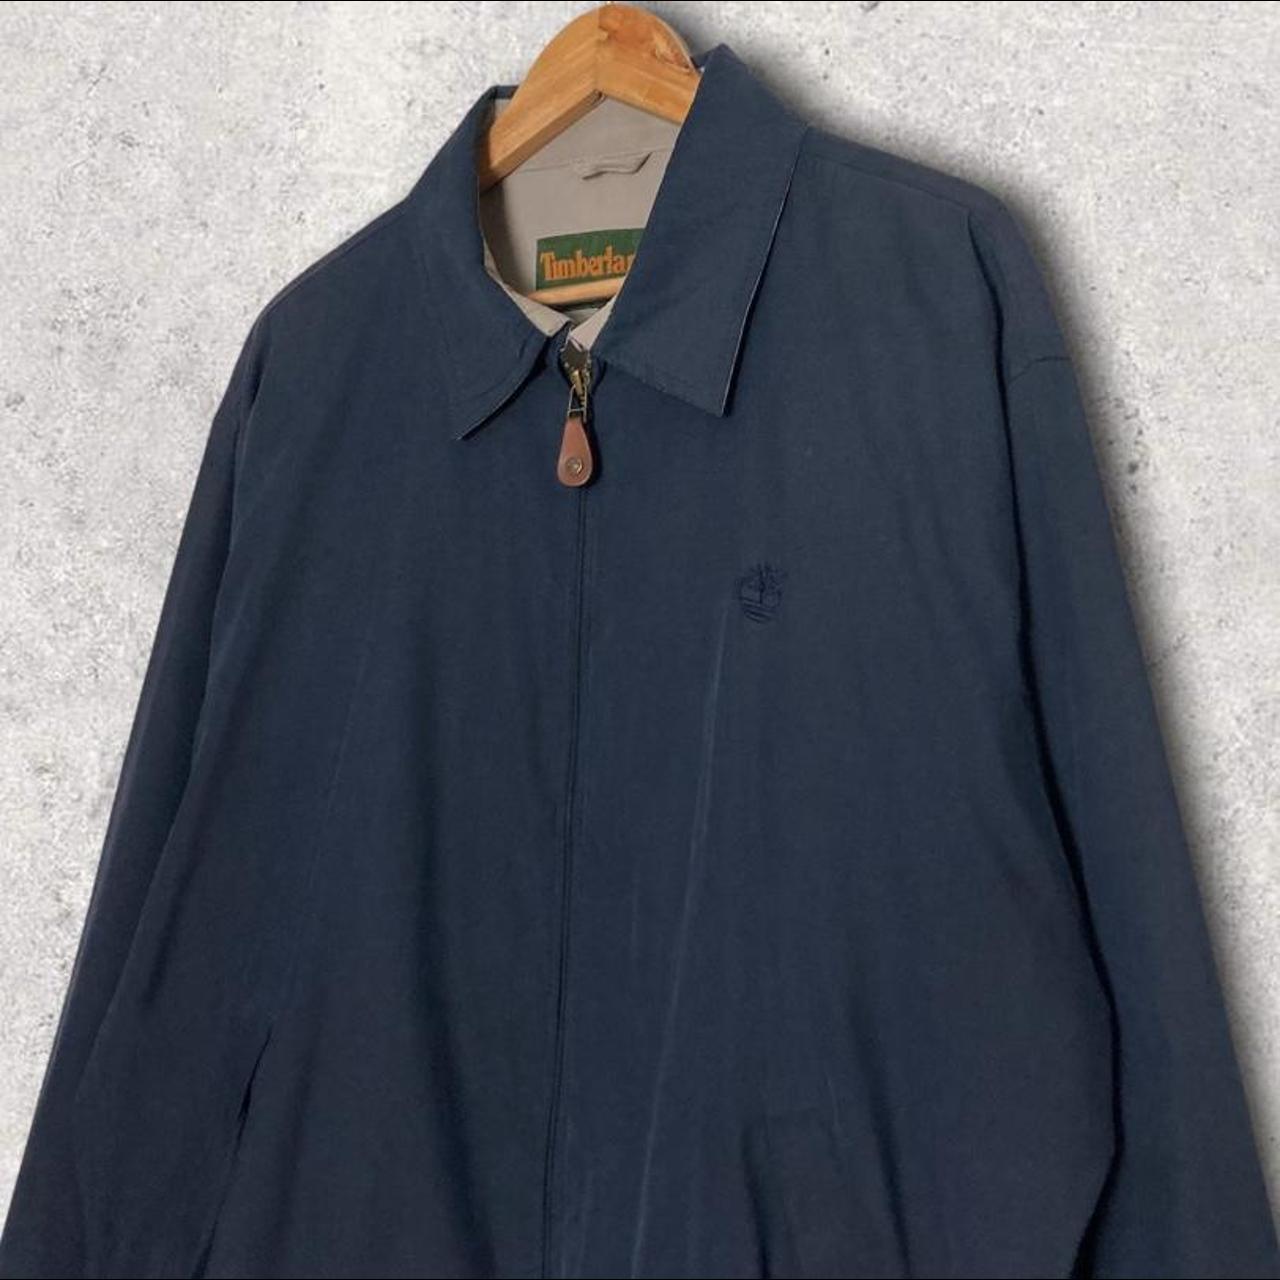 Vintage Timberland Jacket Brilliant water resistant... - Depop